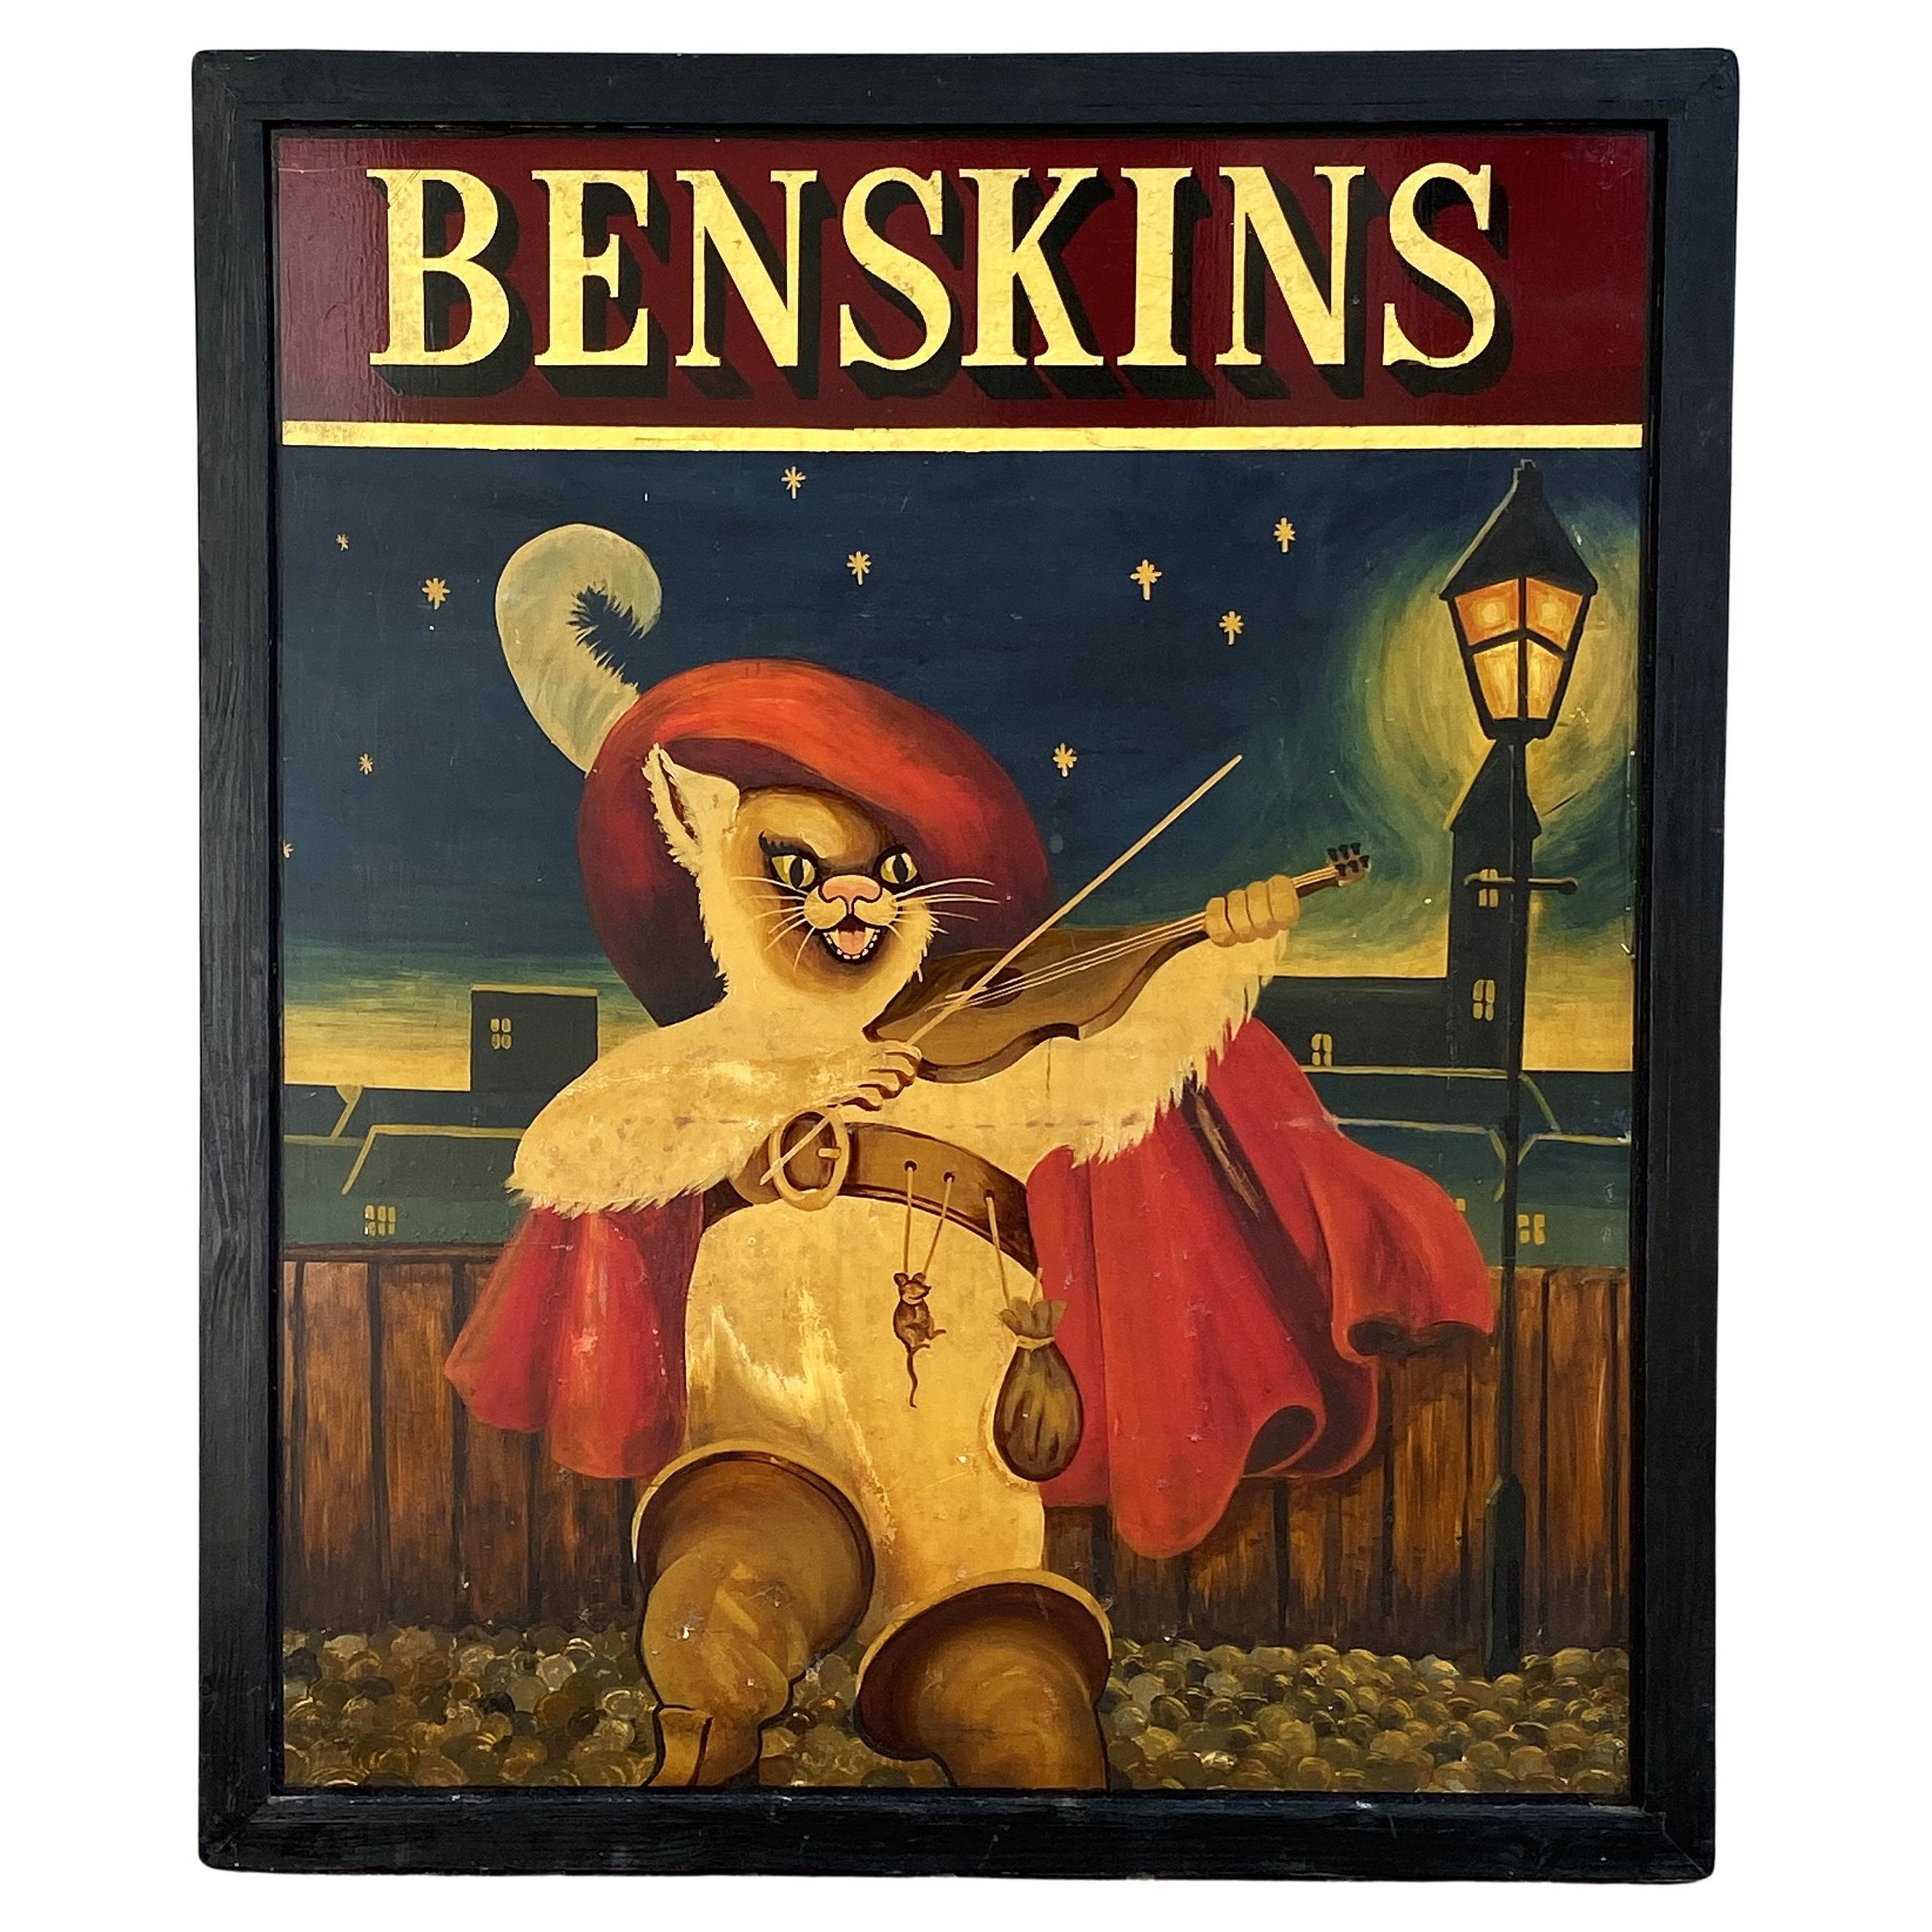 Signe de pub anglaise, Benskins (Puss in Boots)